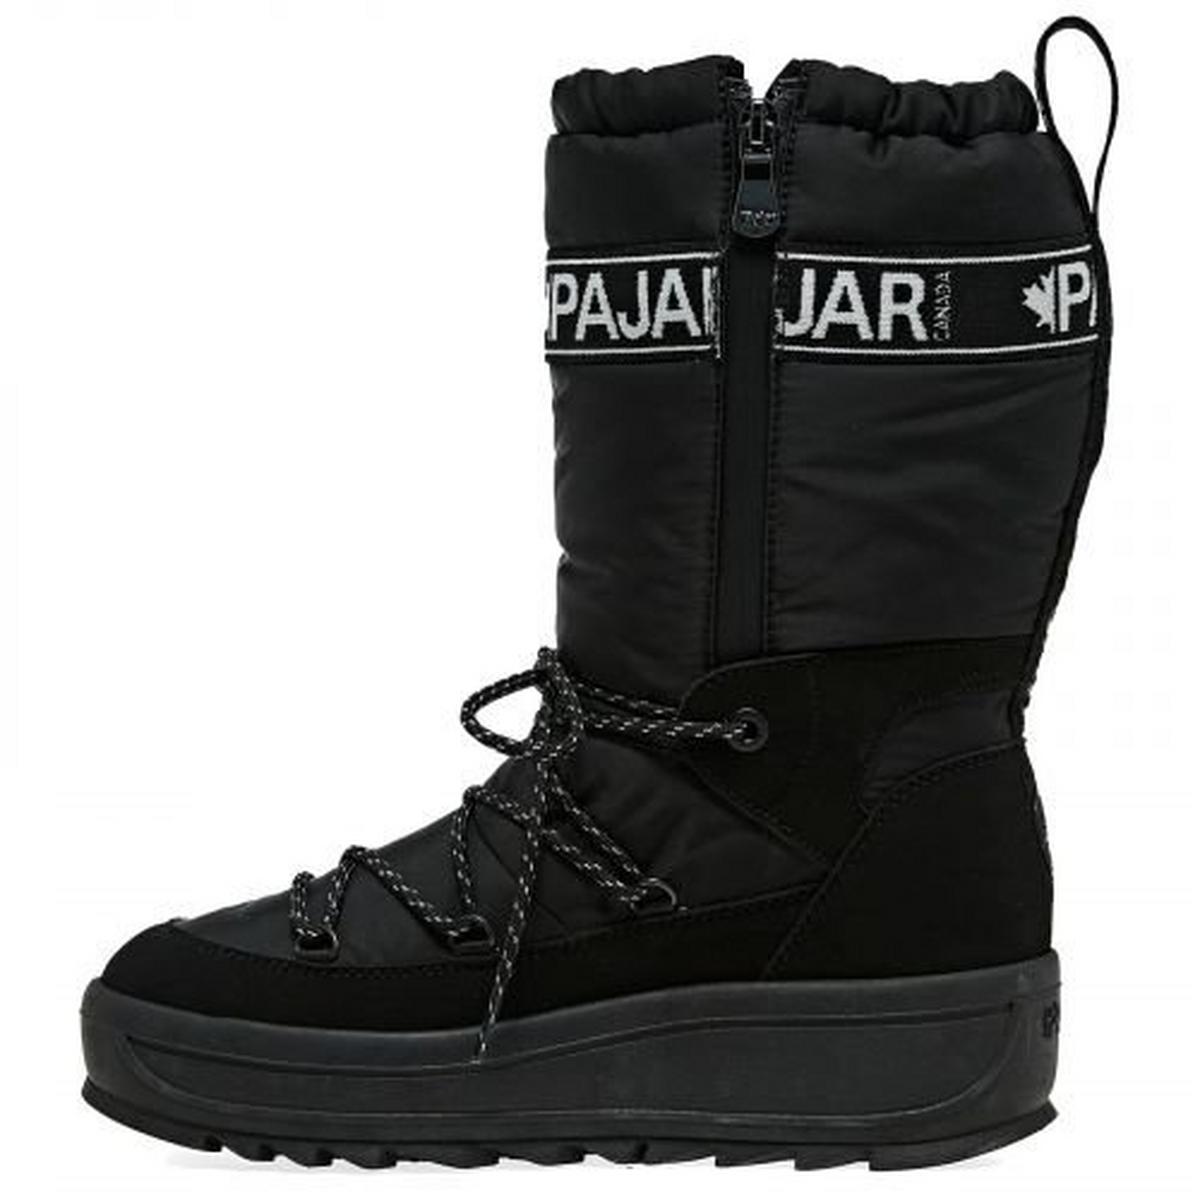 Pajar Women's Galaxy High Boot - Black